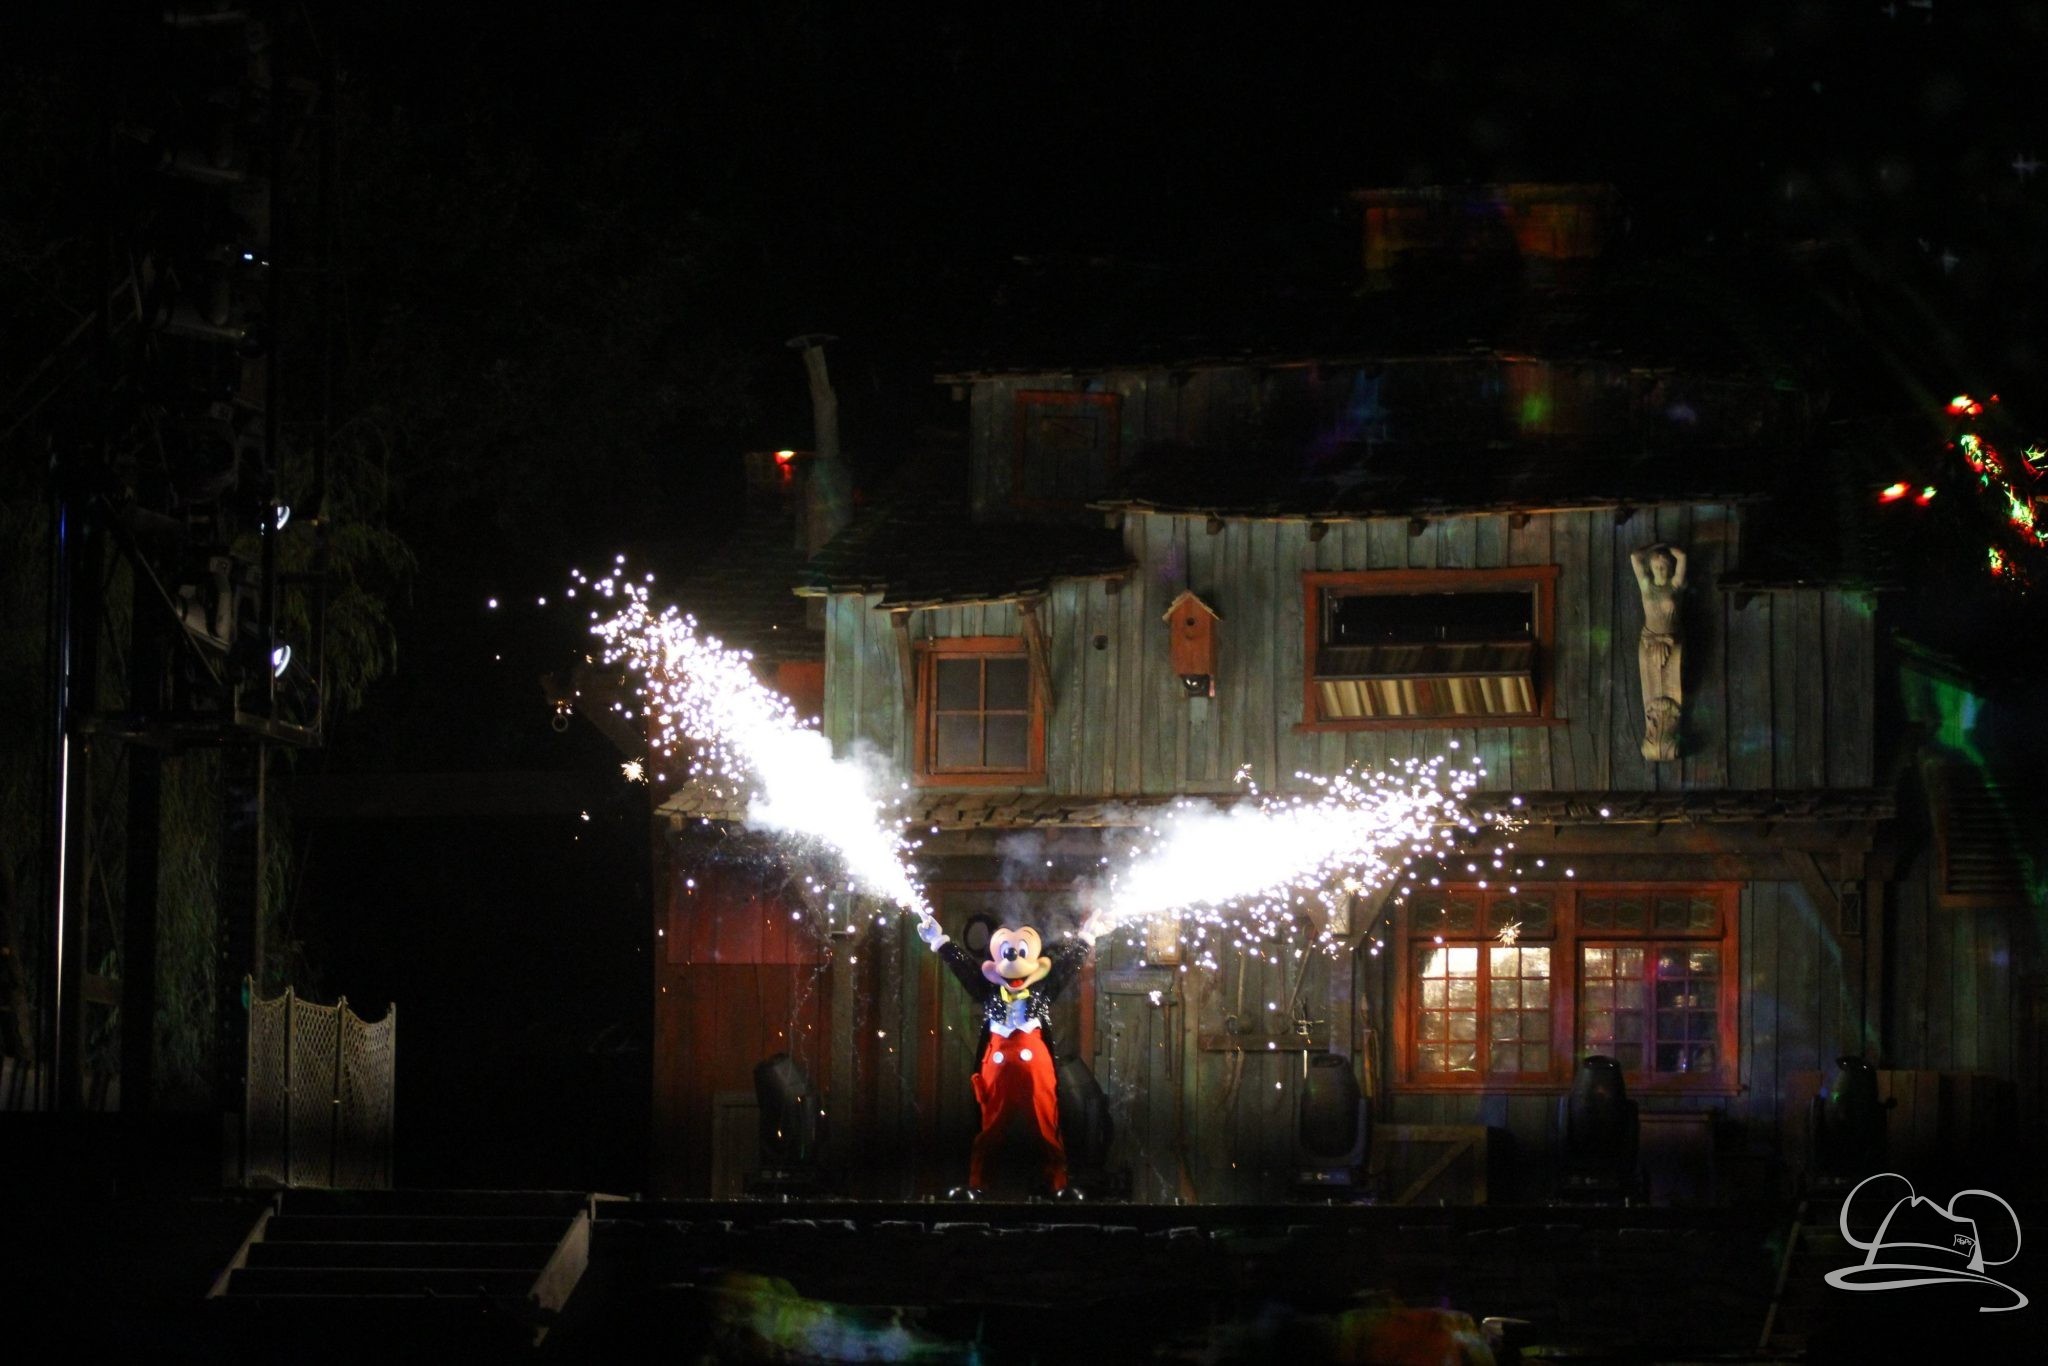 Fantasmic! Returns to the Disneyland Resort